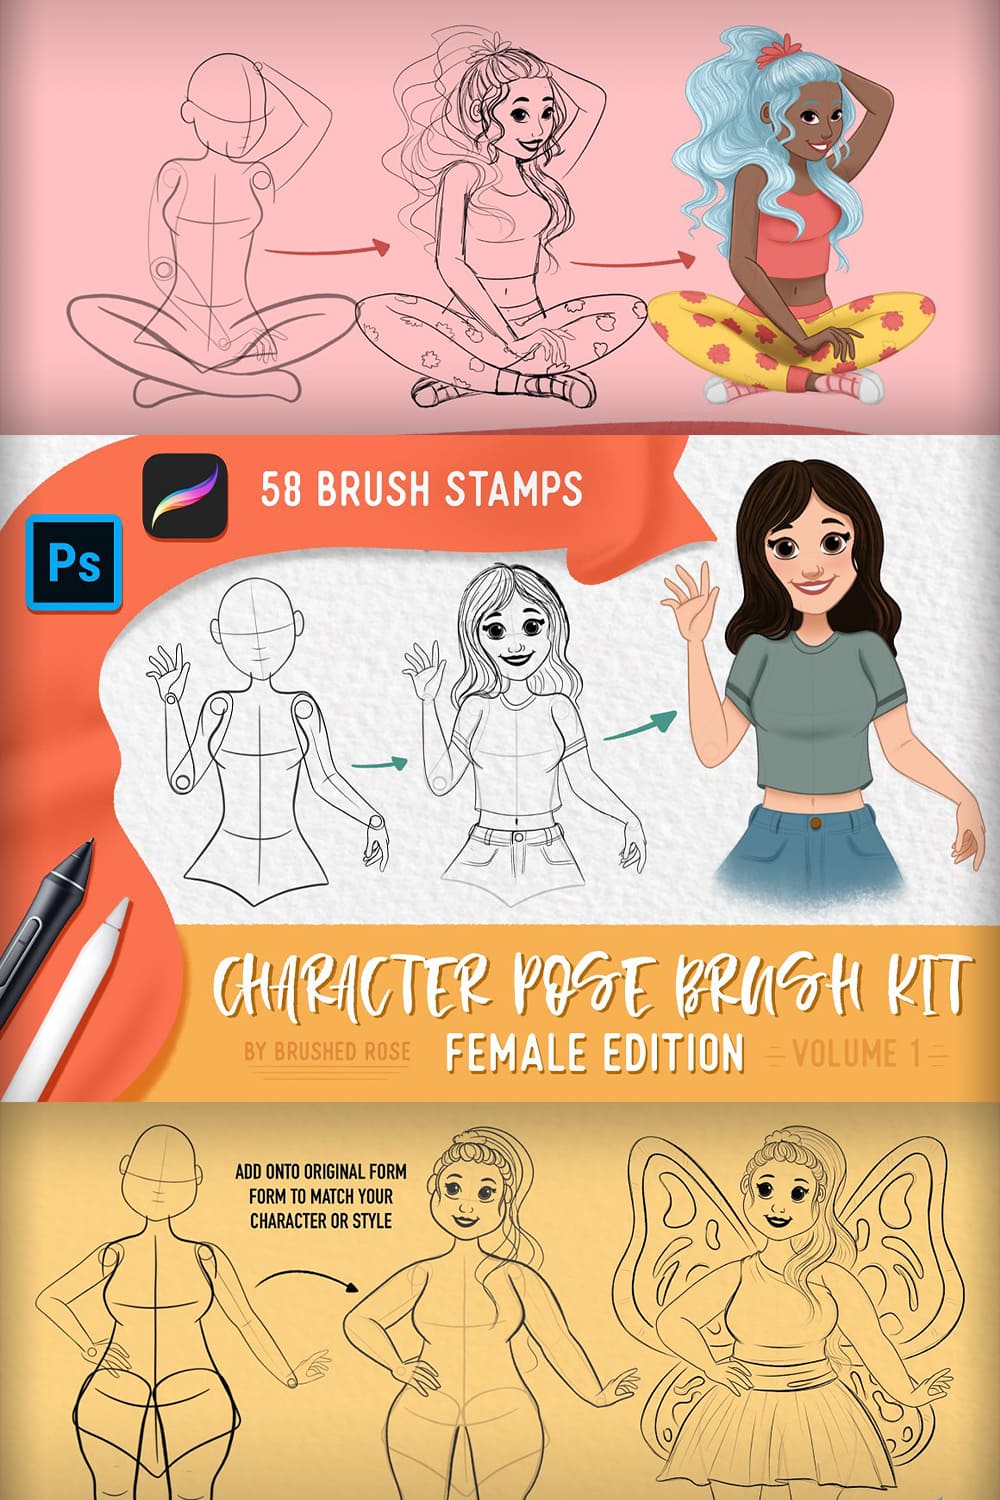 character pose brush kit pinterest image.